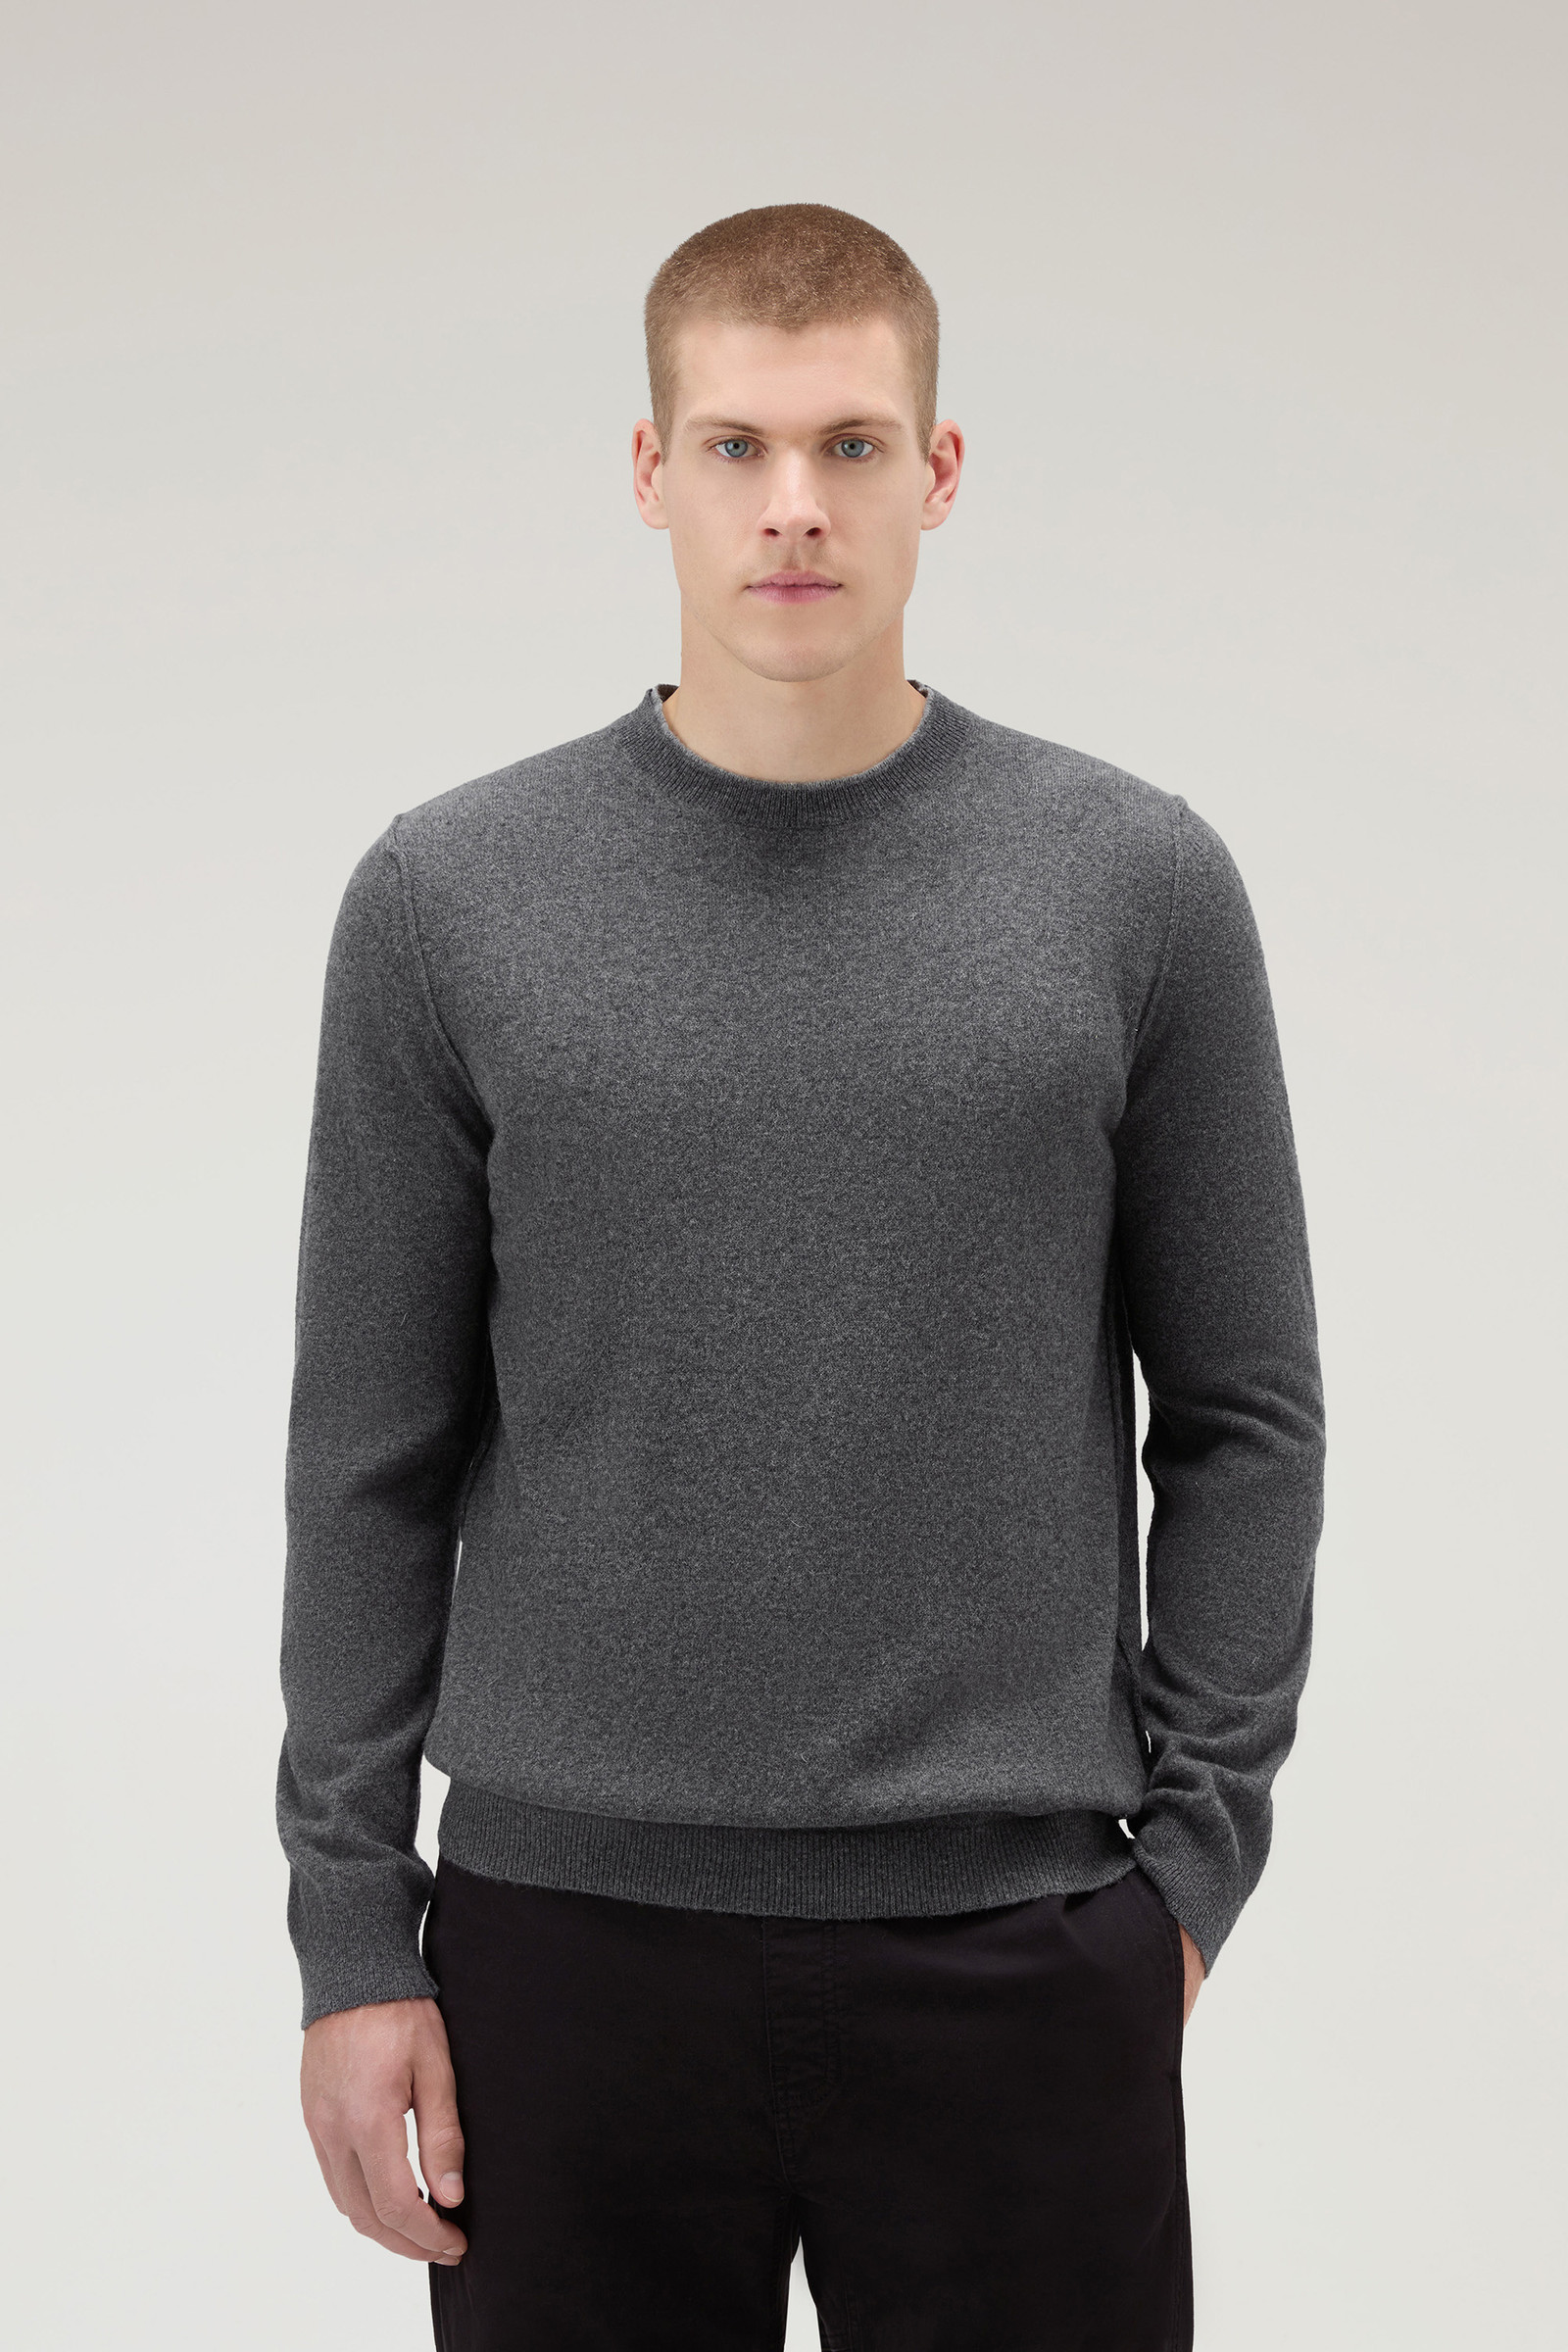 WOOLRICH 1/4 Zip Gray Pullover Sweater Men's Size Medium RN#137013 EUC!